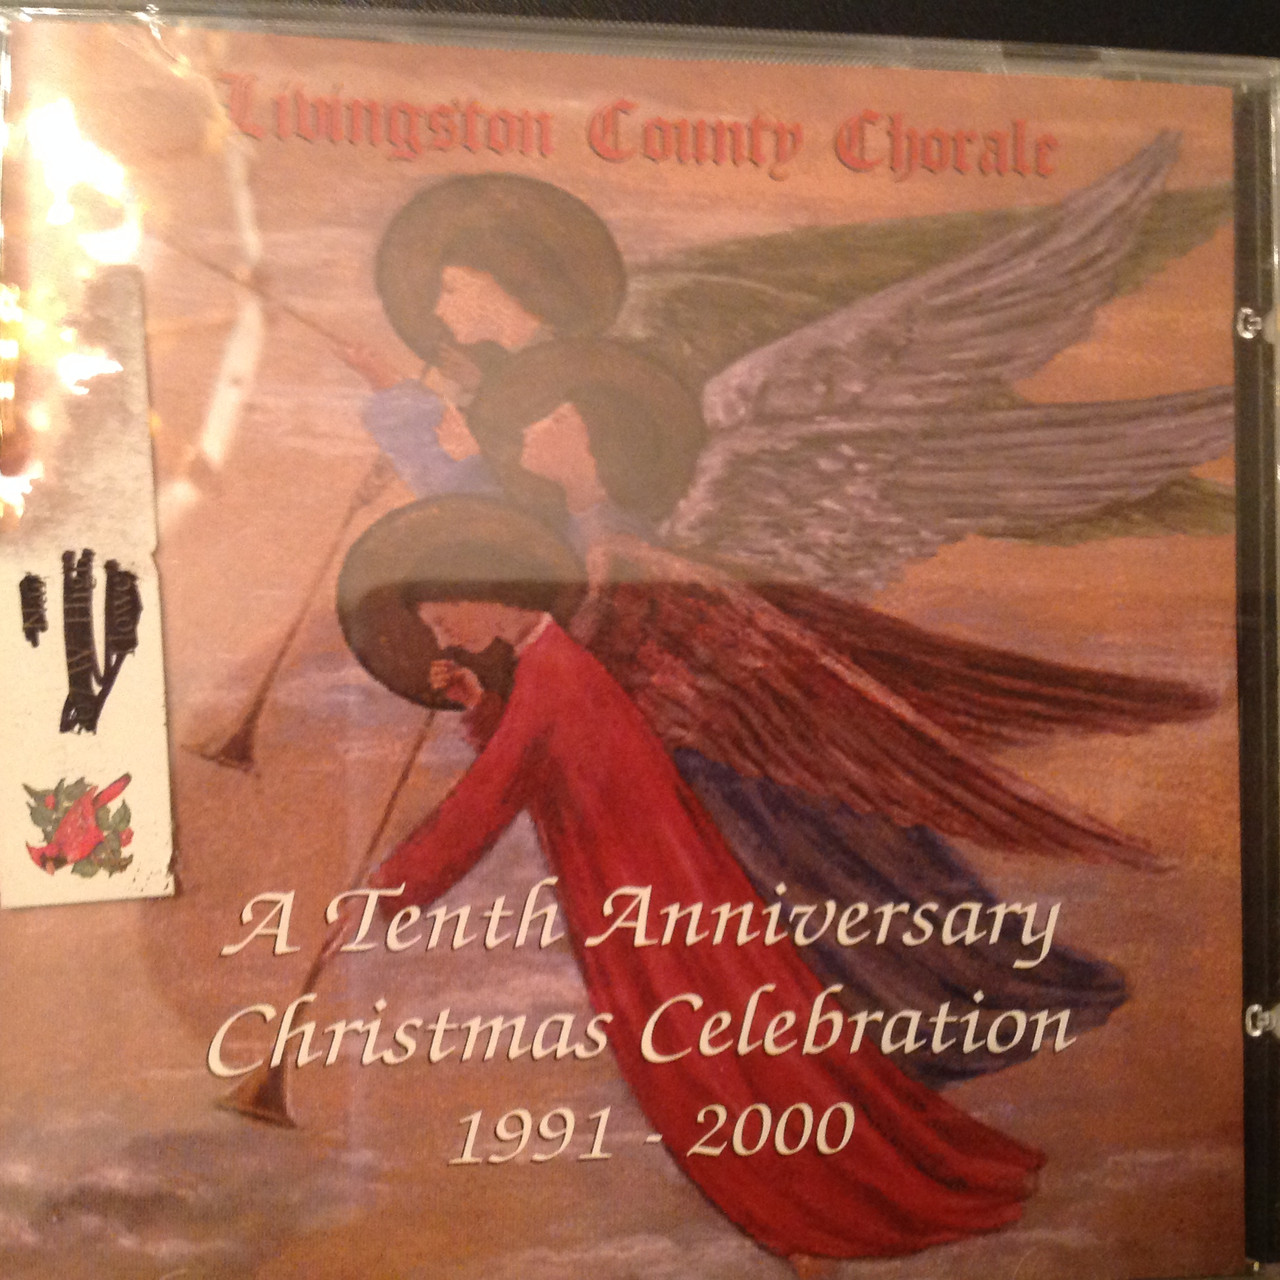 Livingston County Chorale, A Tenth Anniversary Christmas Celebration 1991-2000 CD